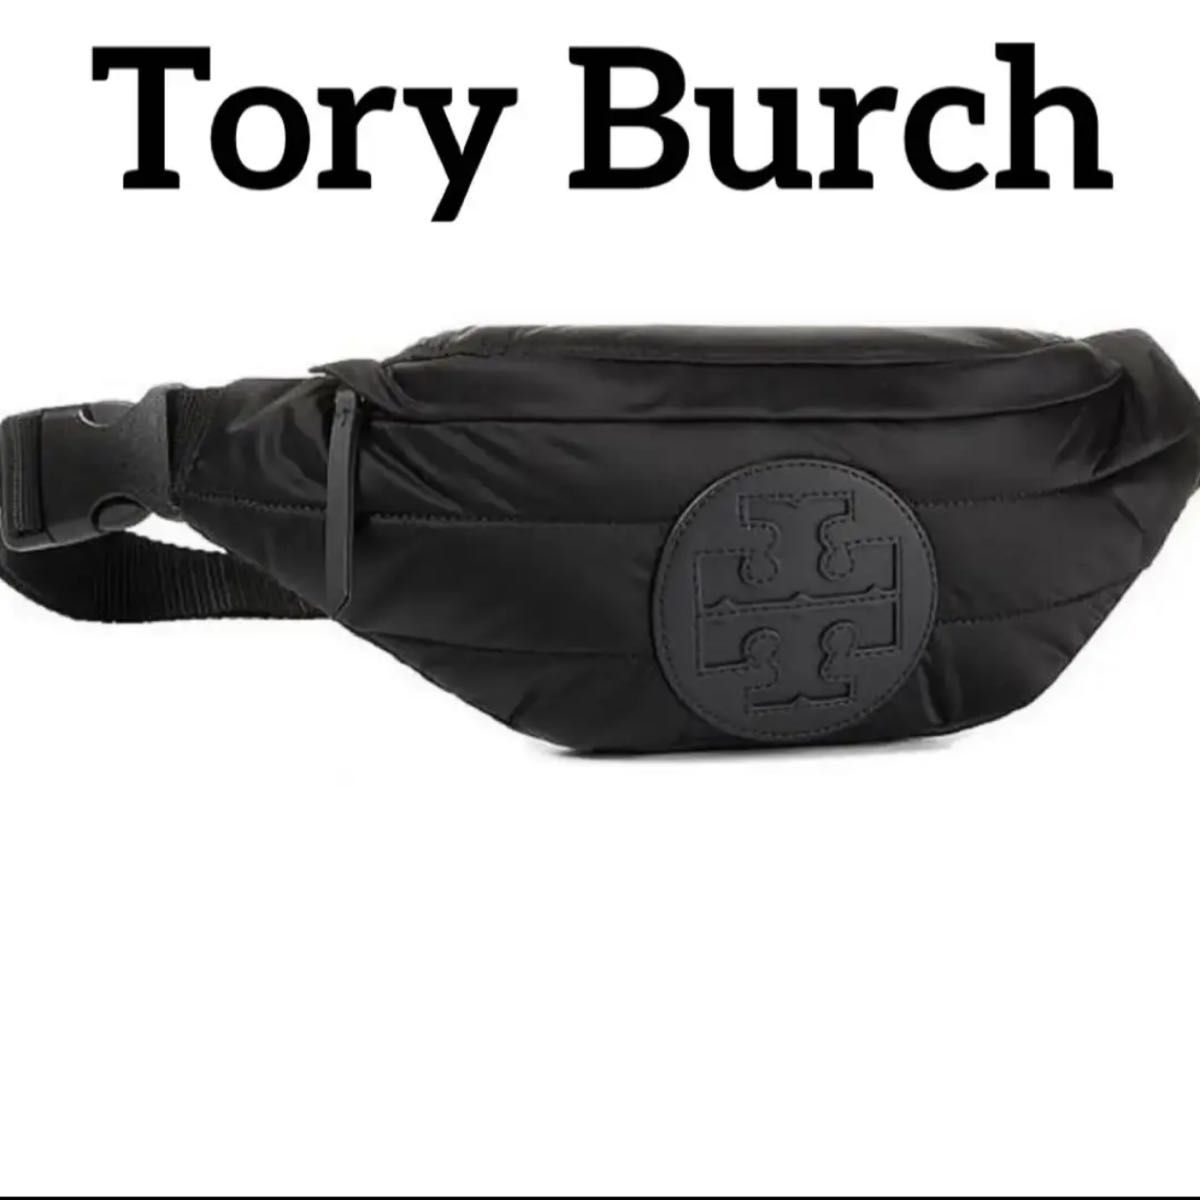 Tory Burch トリーバーチ ウエストバッグ ボディバッグ ブラック ヒップバッグ ウエストポーチ ブランド ハイブランド